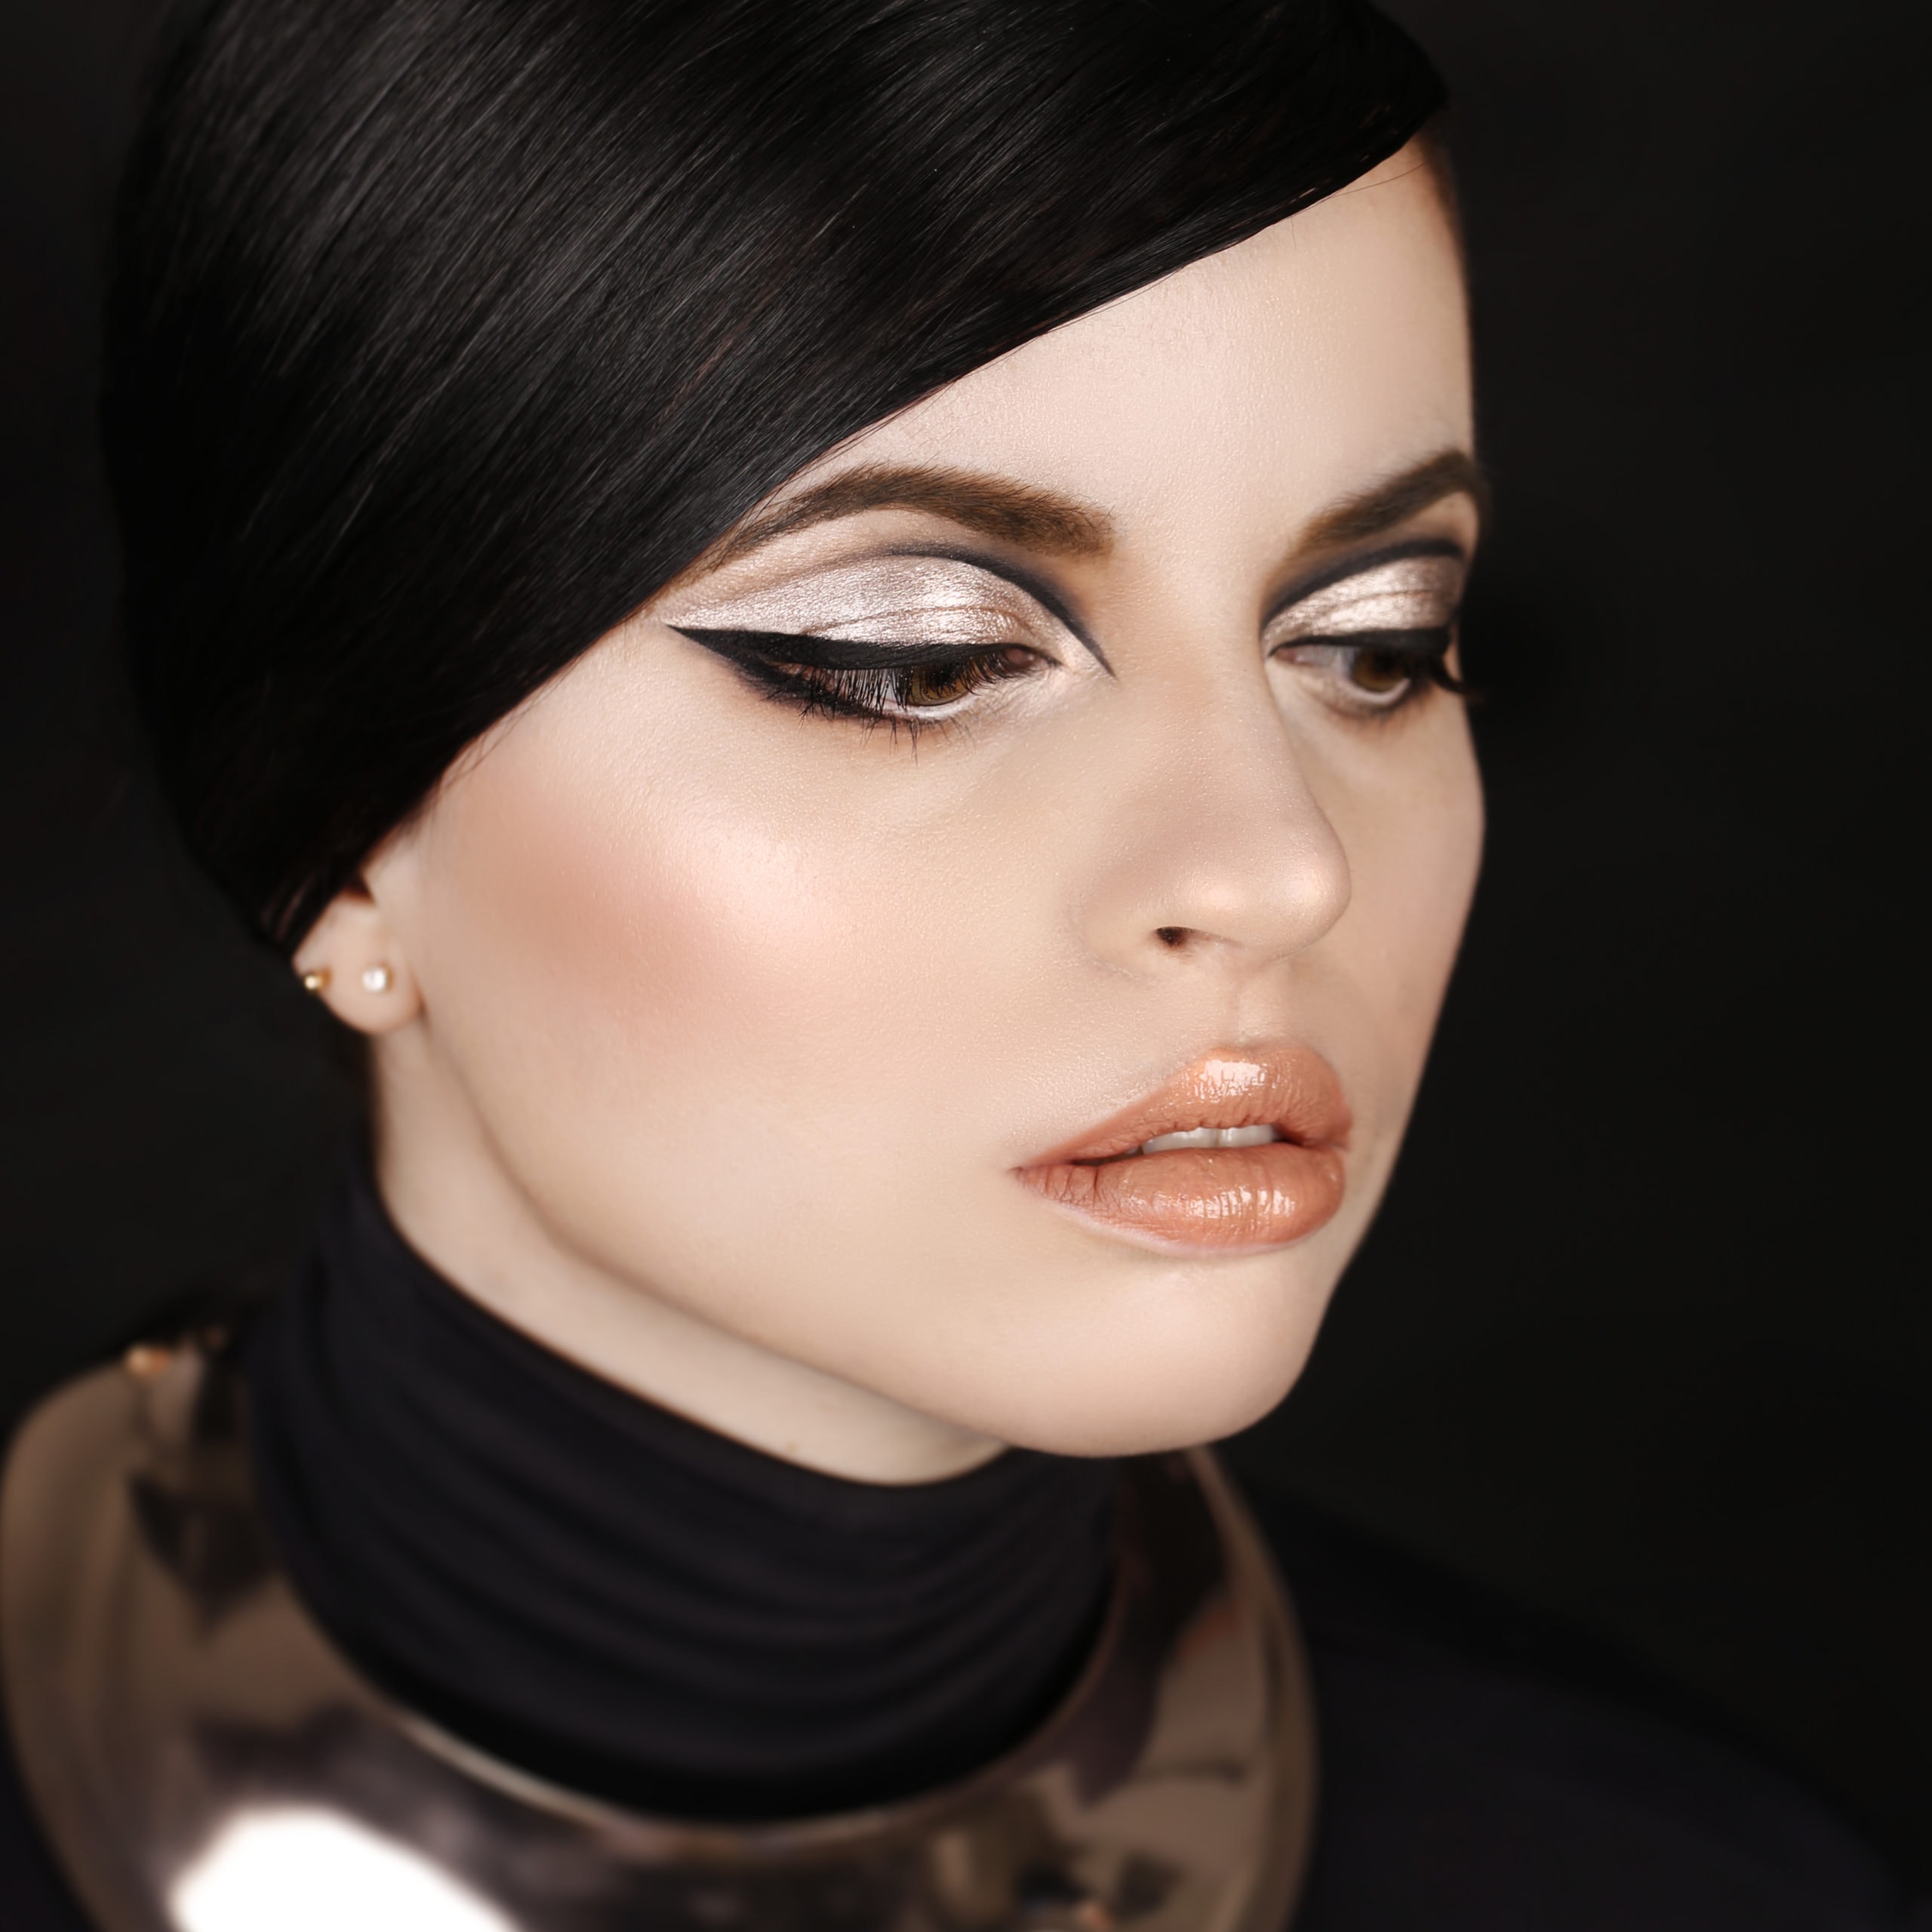 Master Beauty & Fashion Makeup – Nivel avanzado